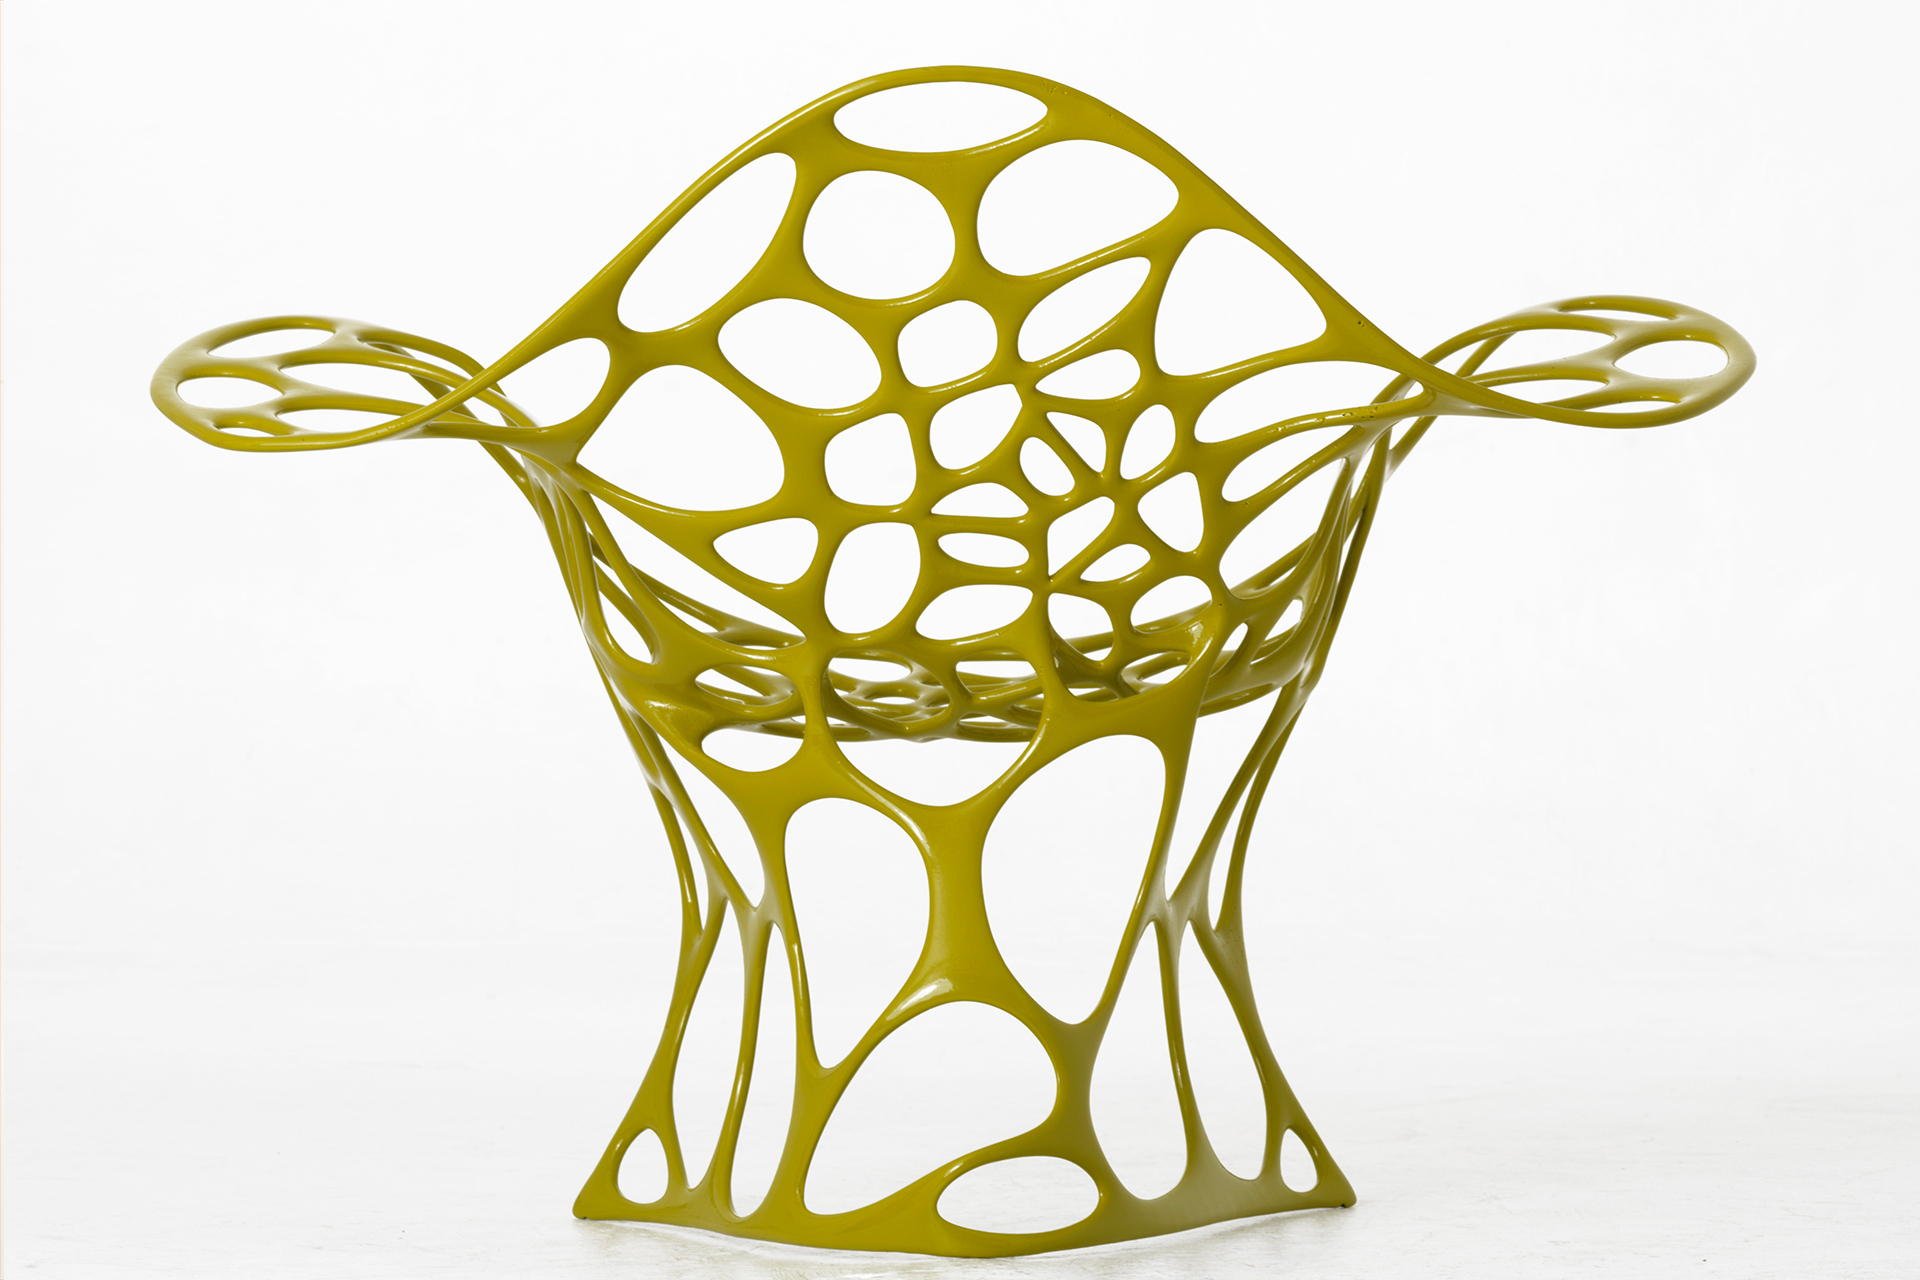 ByElisabethNL: Interior Design: 3D-printed chairs by Joris Laarman Lab